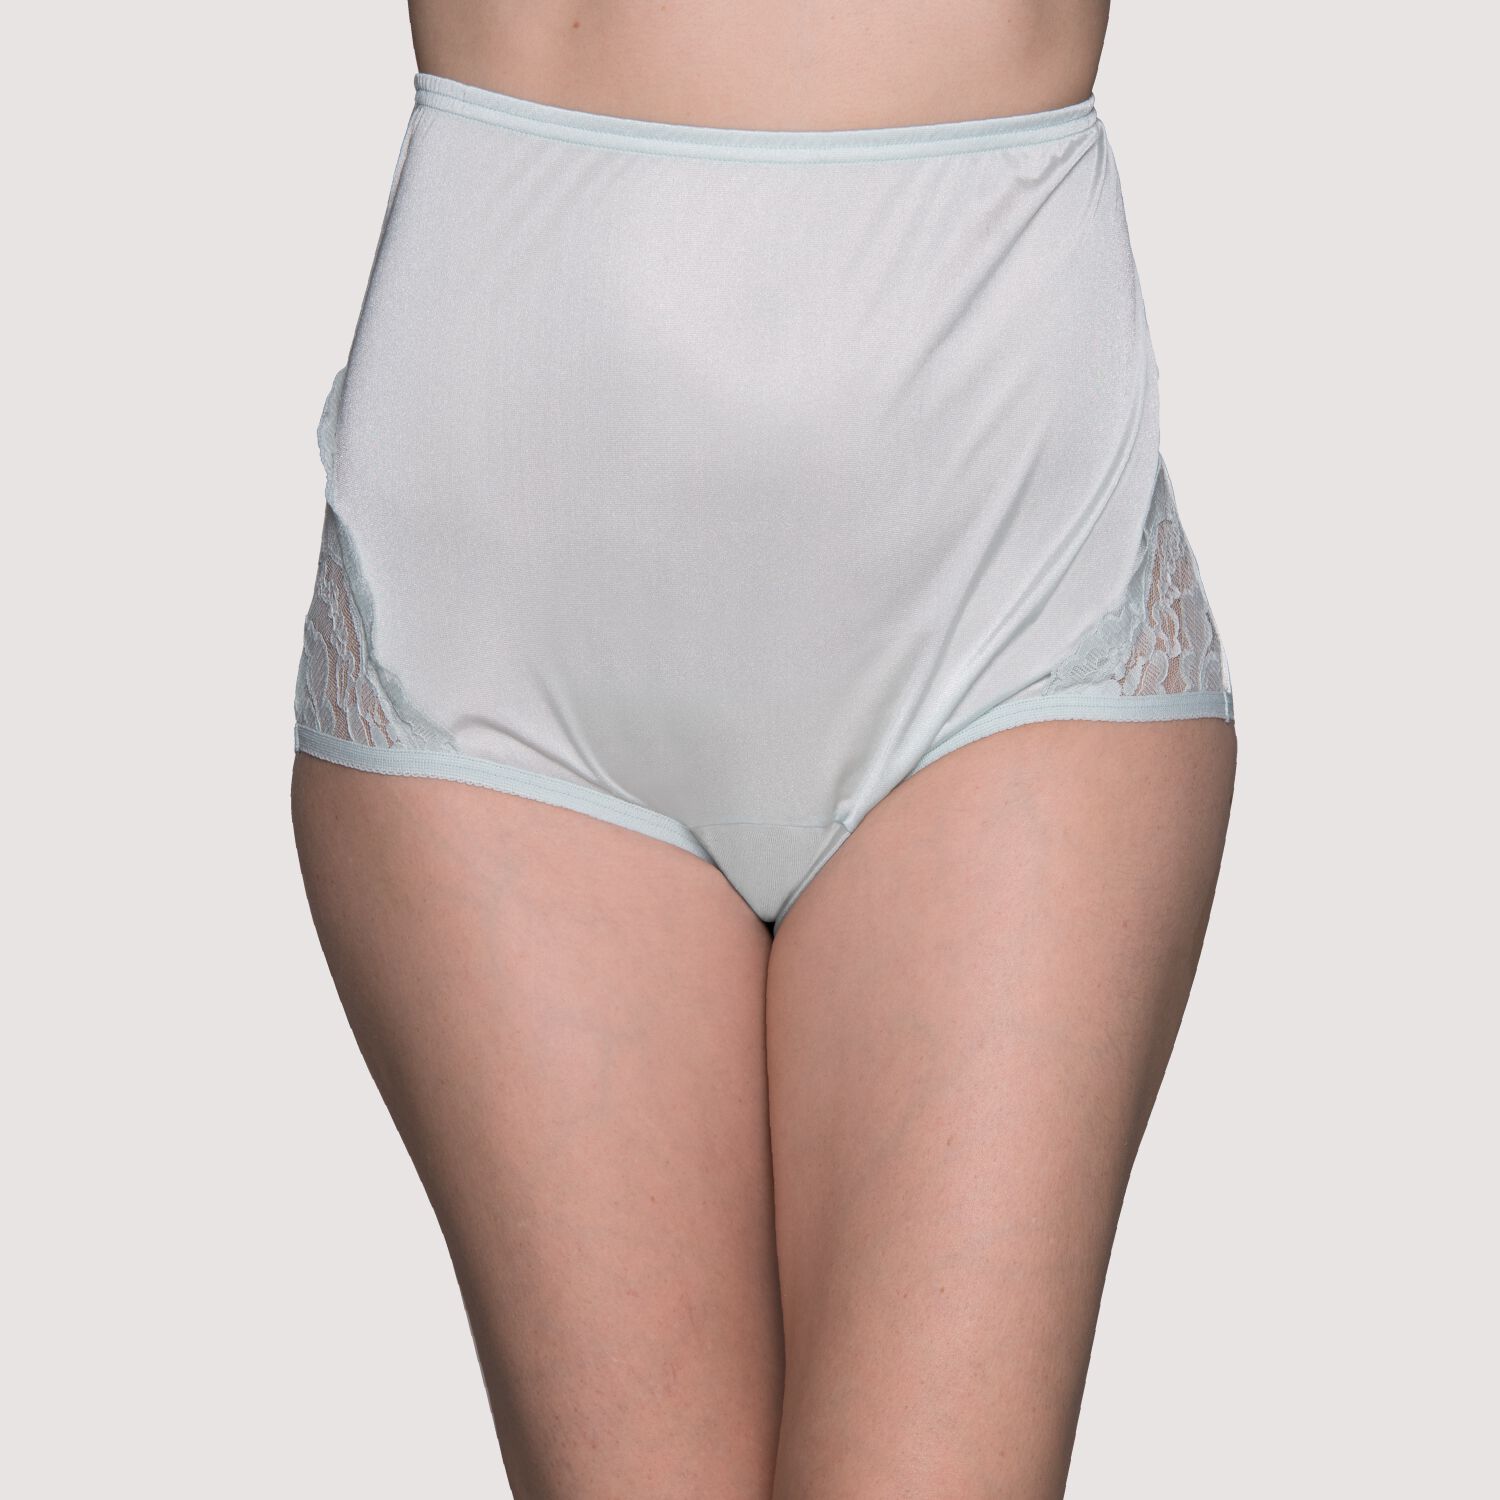 Assorted Size 7 100% Nylon BIKINI Pantie W Matching Elastic Lace BIKINI